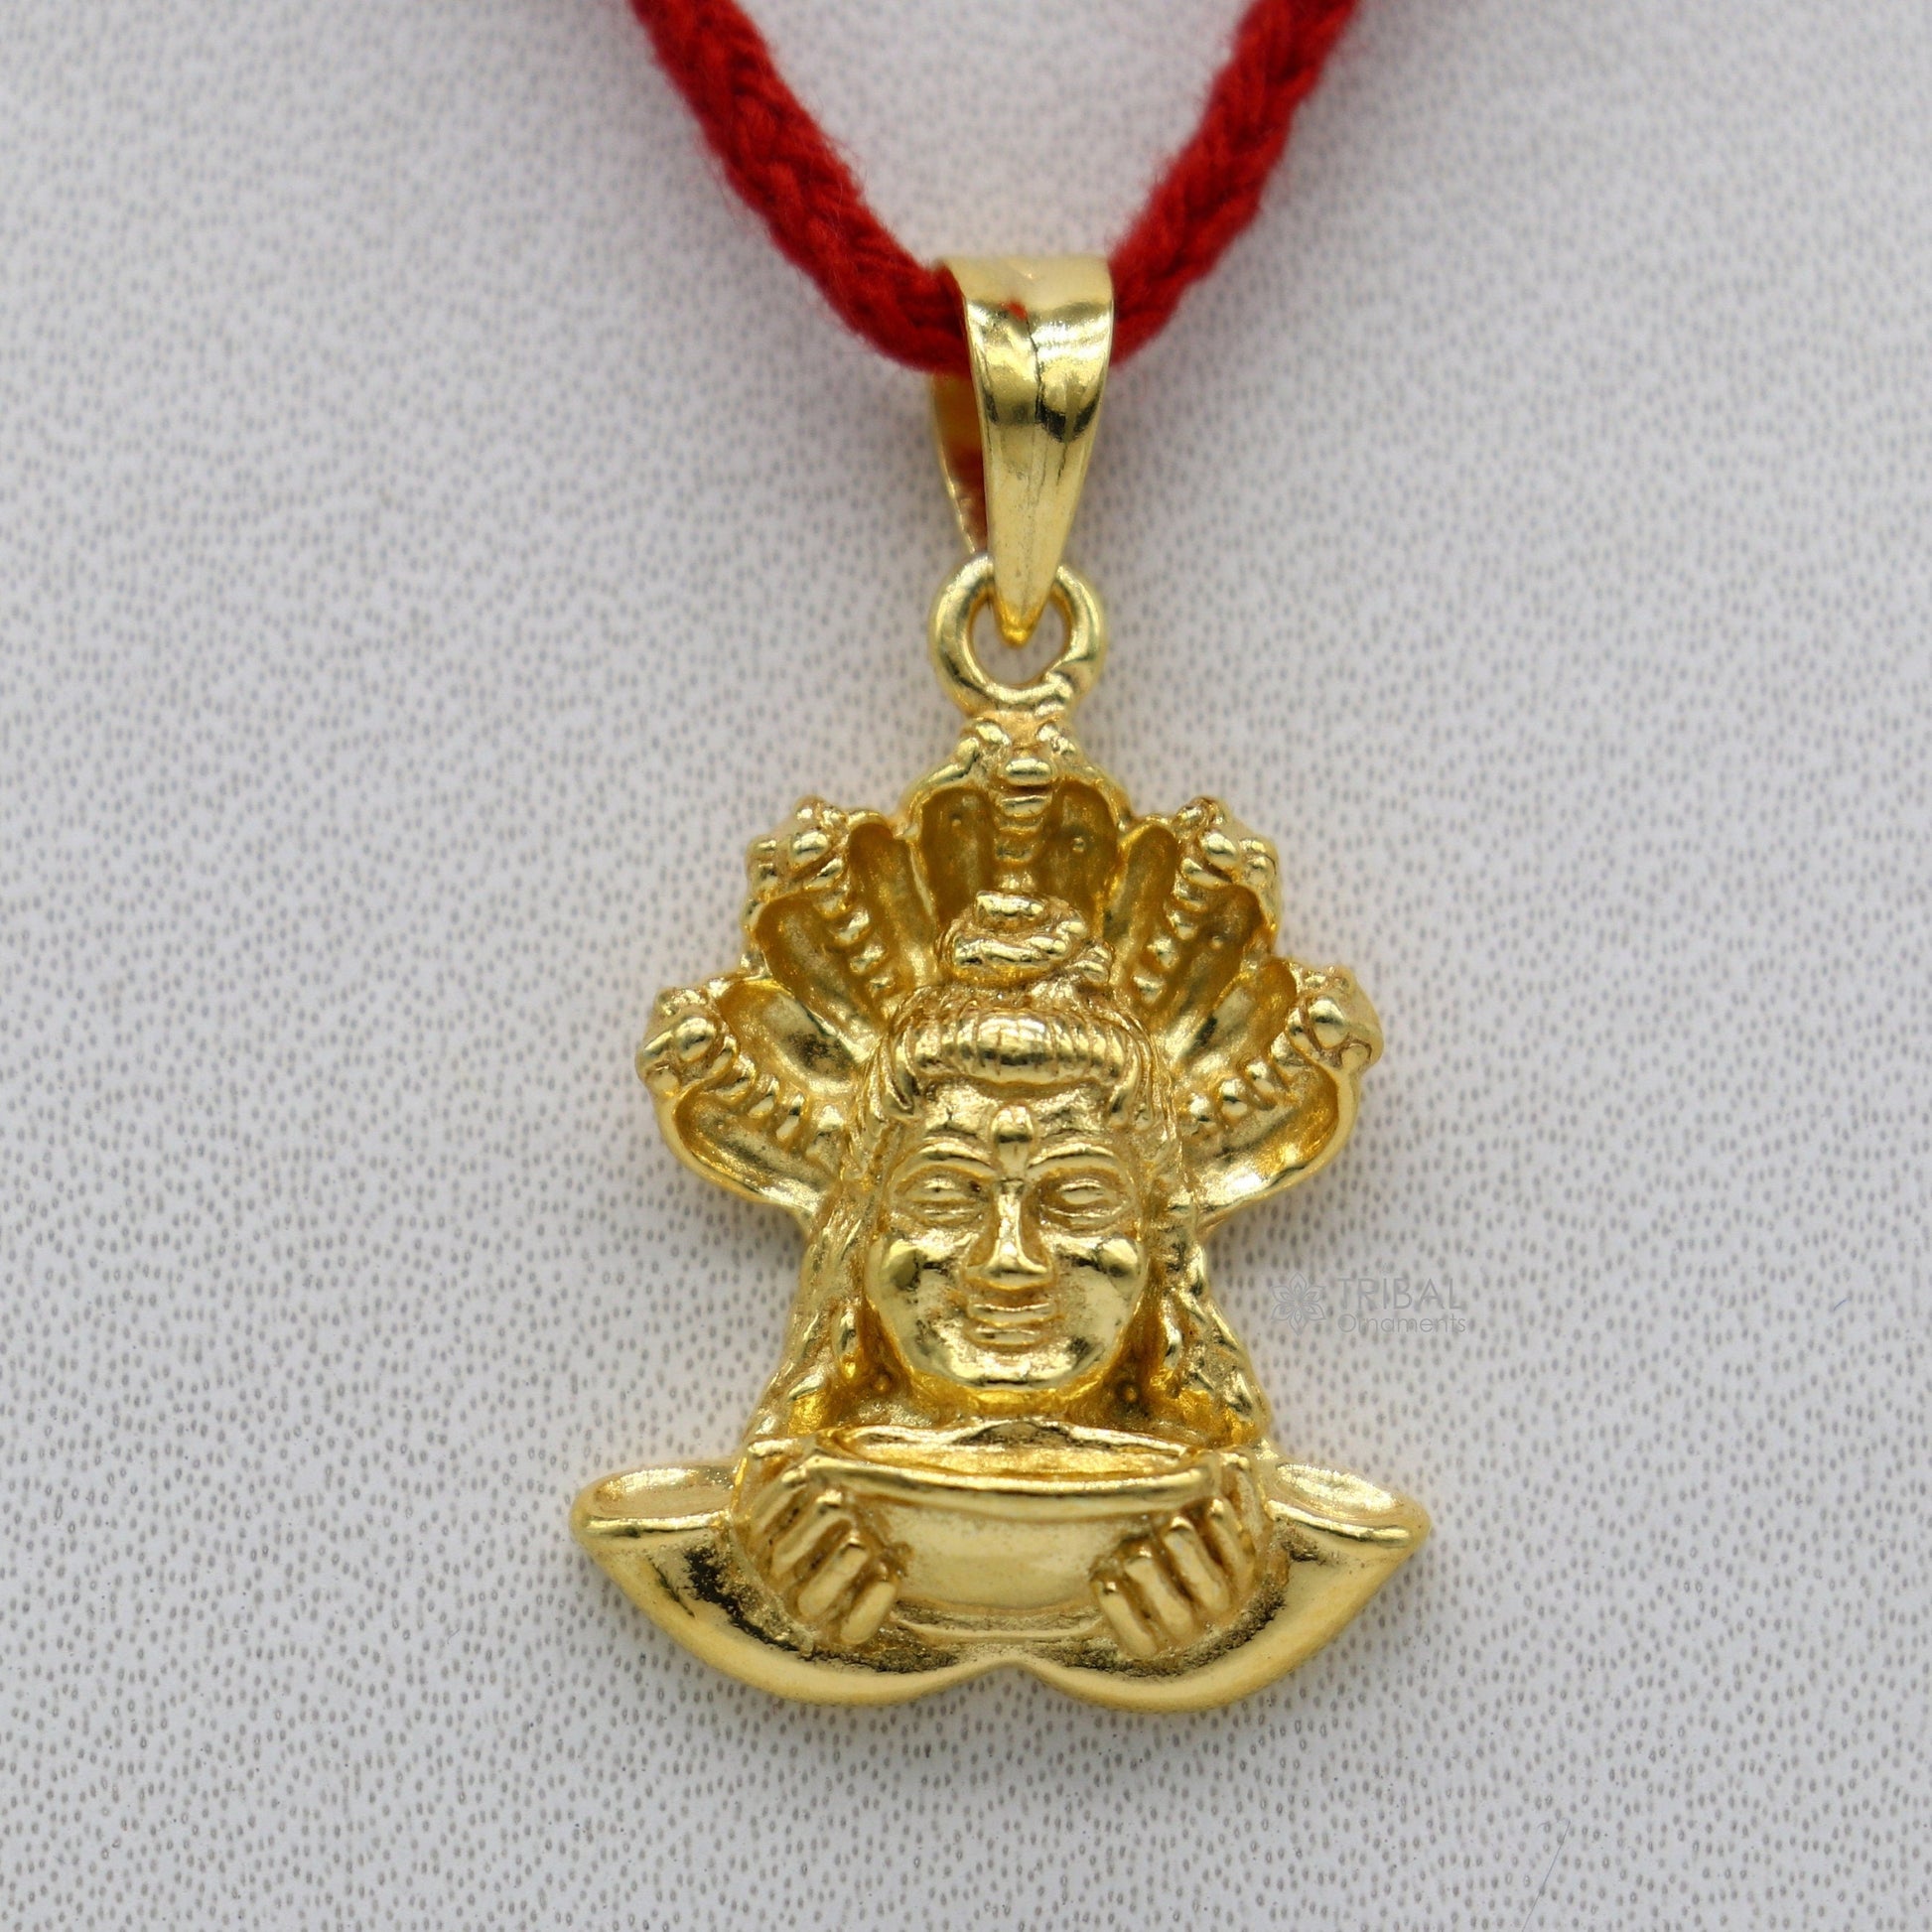 925 sterling silver handmade idol God Shiva pendant, amazing designer gold polished silver mahakal pendant unisex gifting jewelry nsp597 - TRIBAL ORNAMENTS